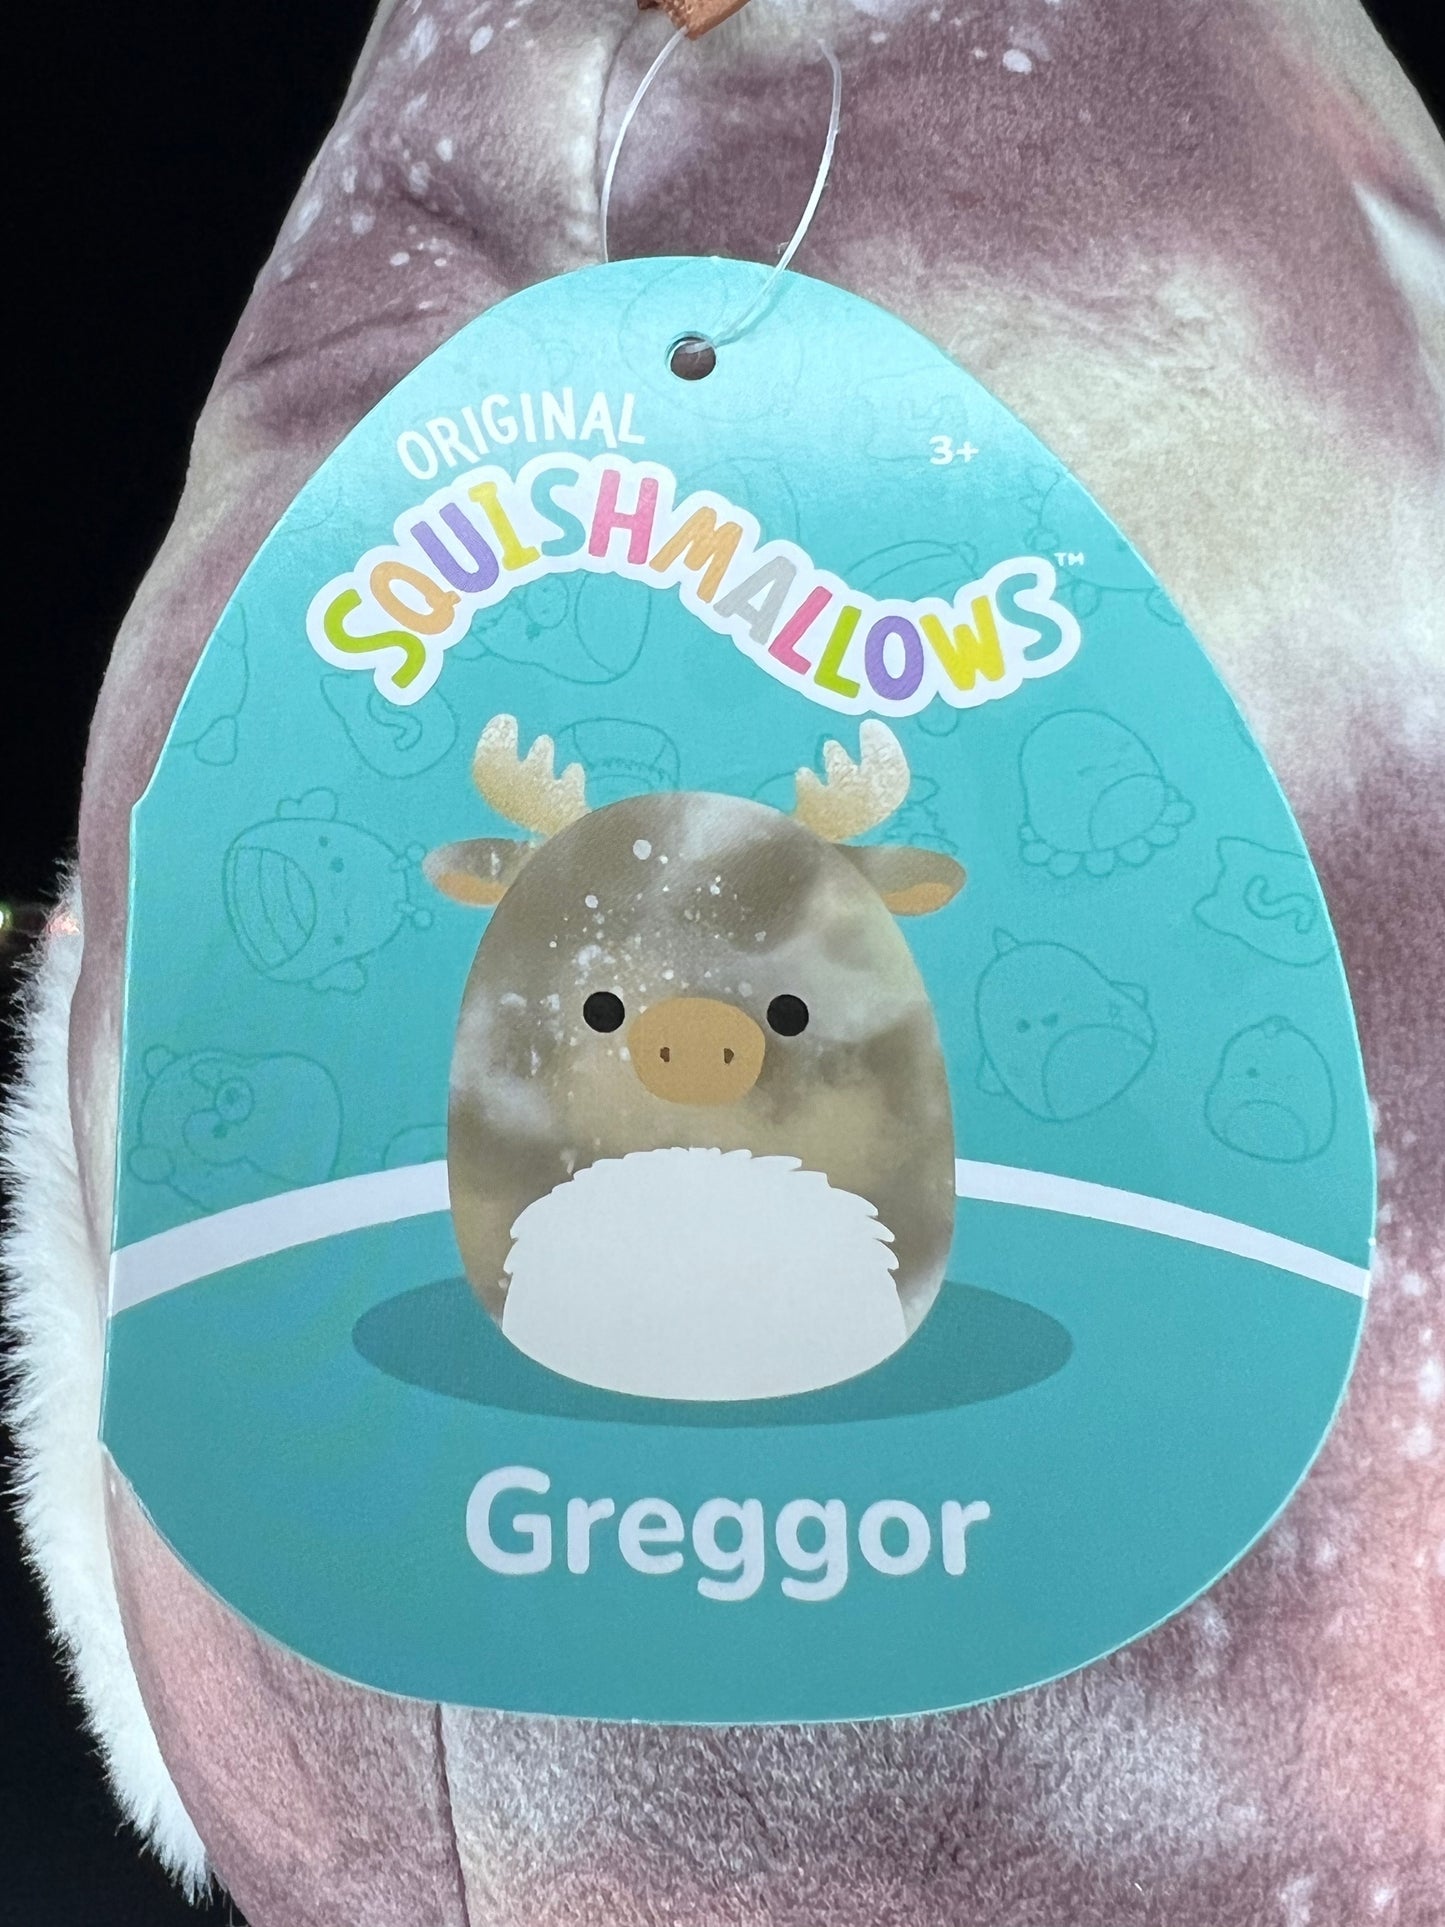 Squishmallow 8” Greggor the Moose.